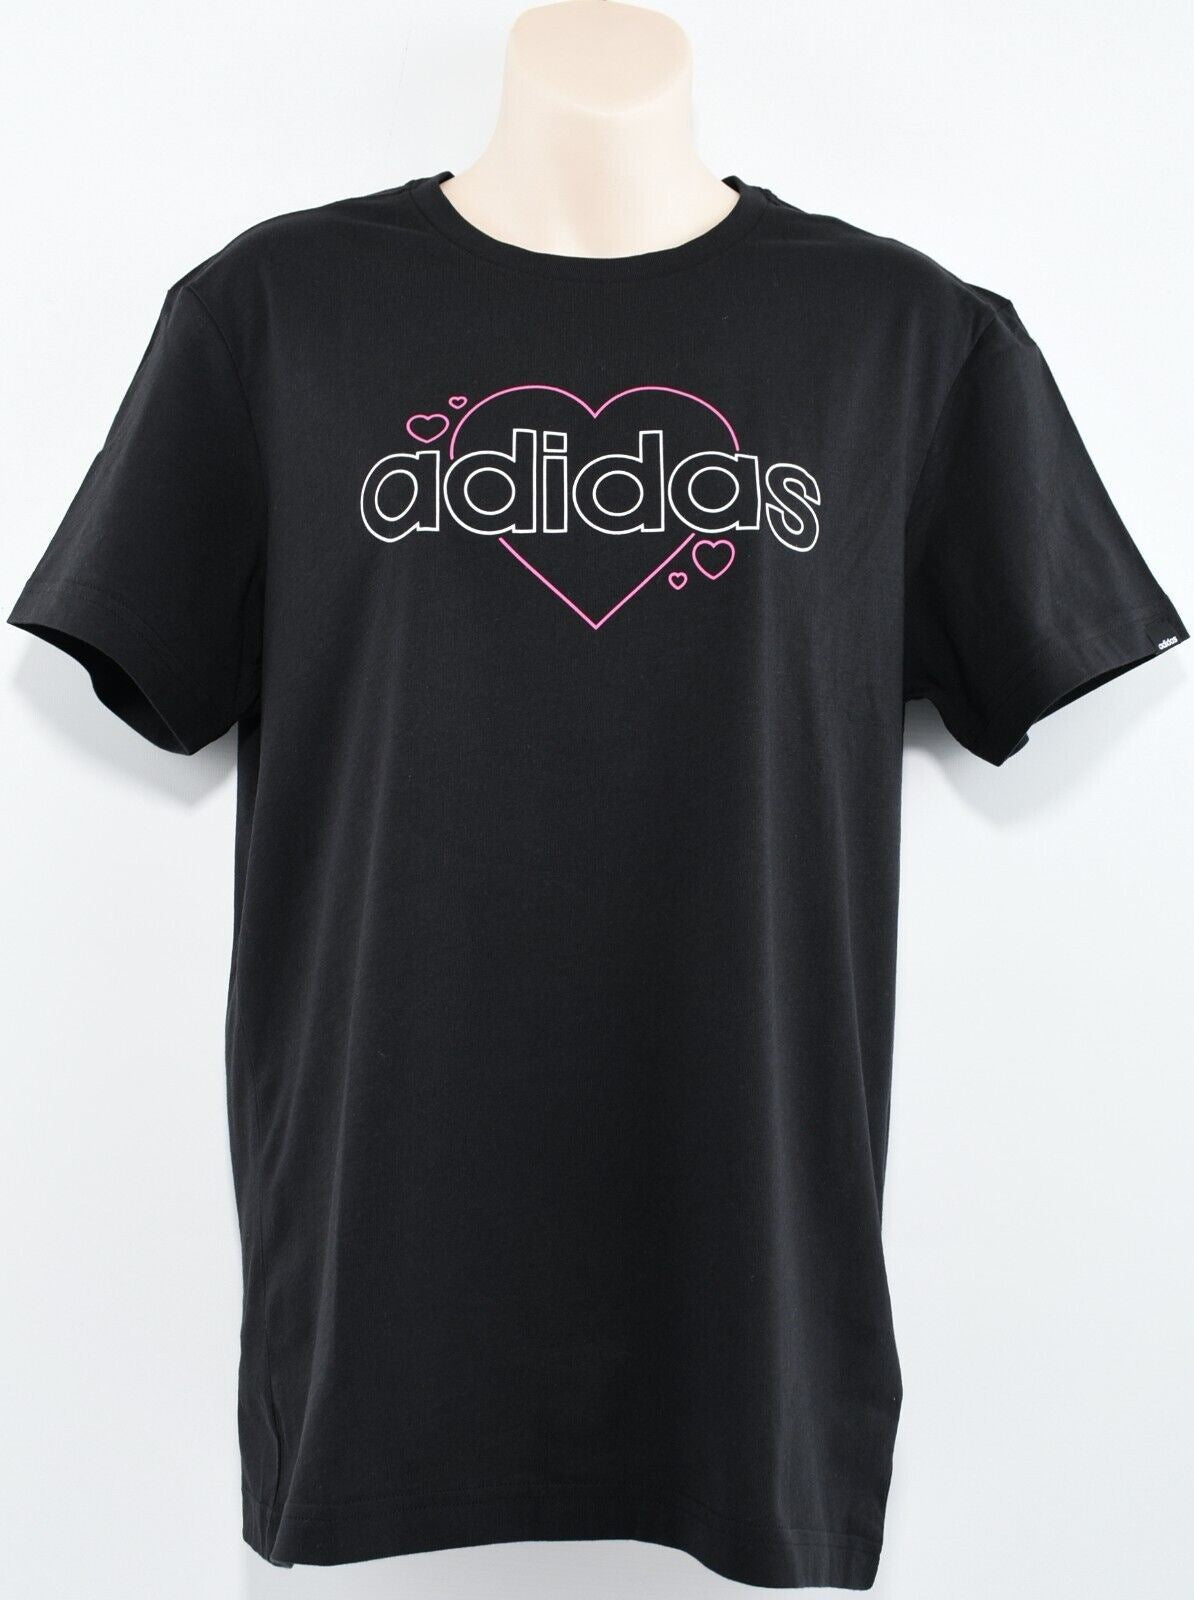 ADIDAS Women's Linear Love Logo Crew Neck T-shirt, Tee, Black, size XS (UK 4-6)